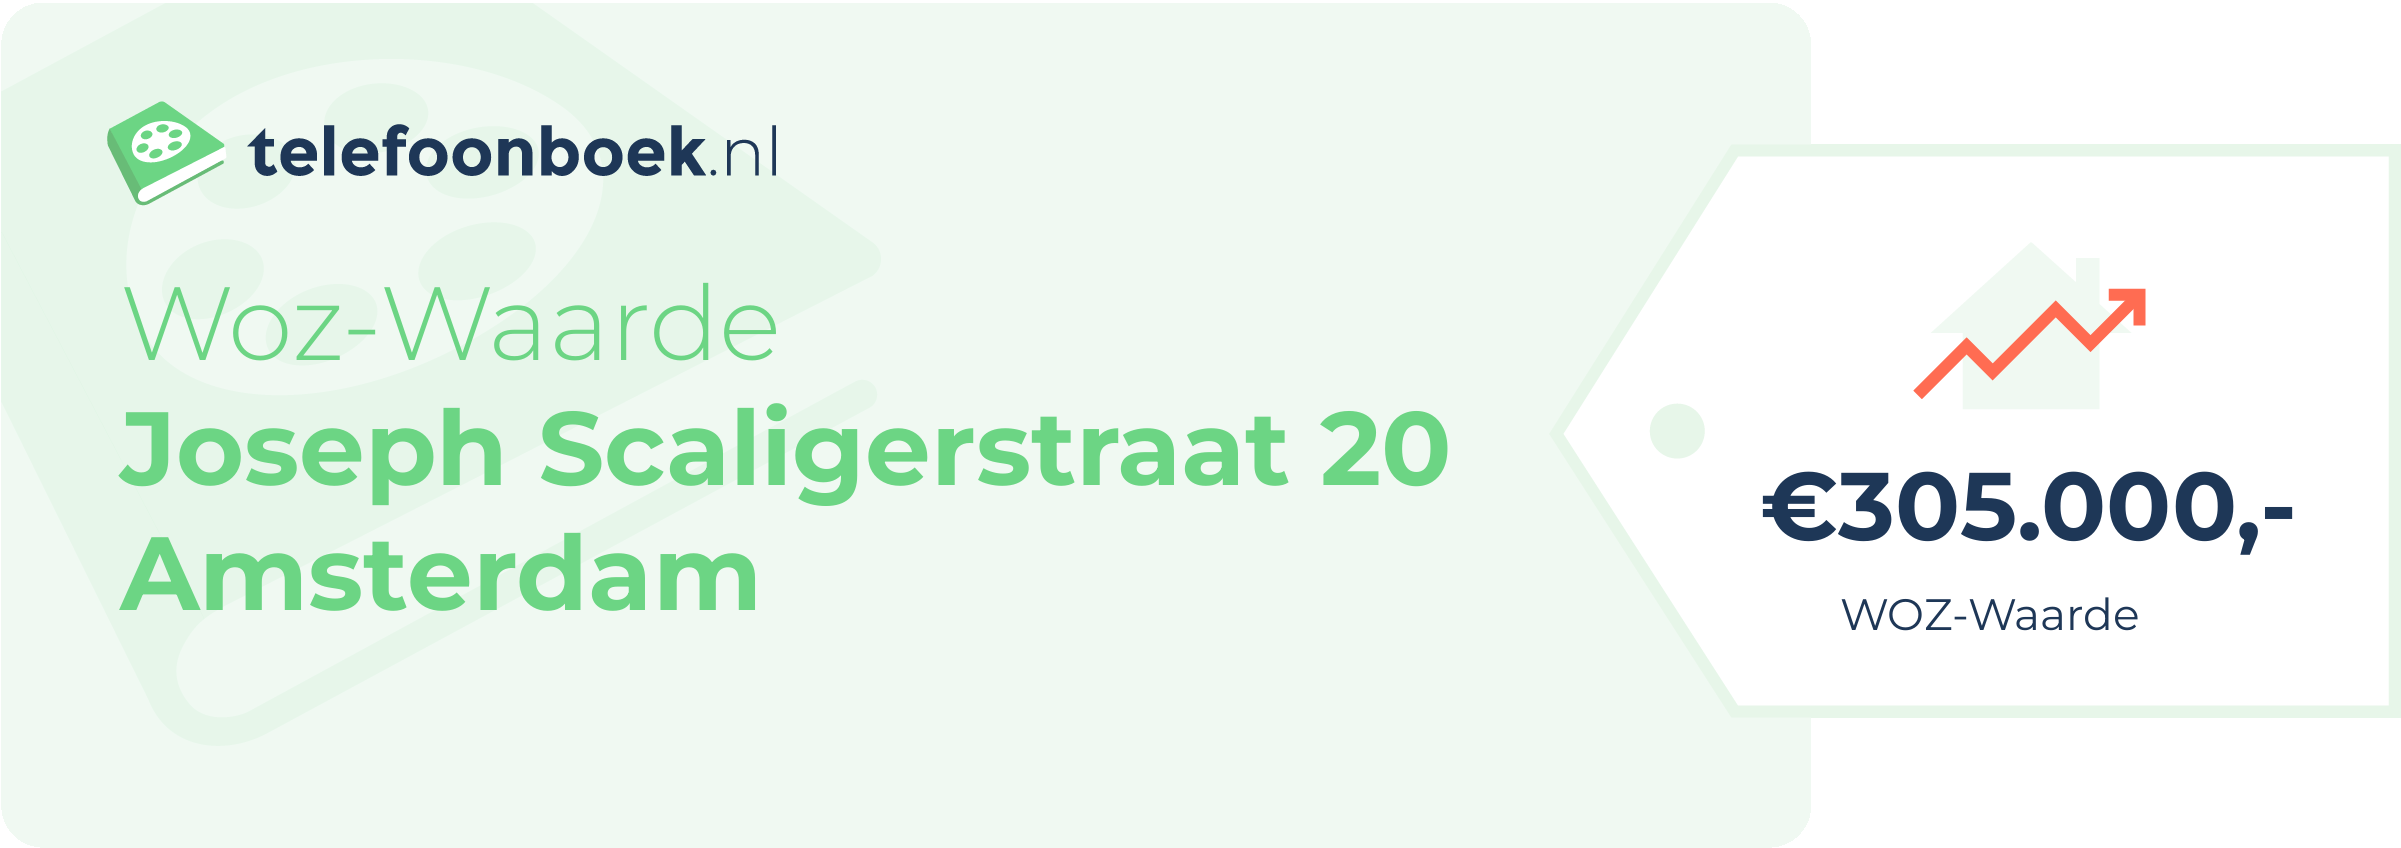 WOZ-waarde Joseph Scaligerstraat 20 Amsterdam